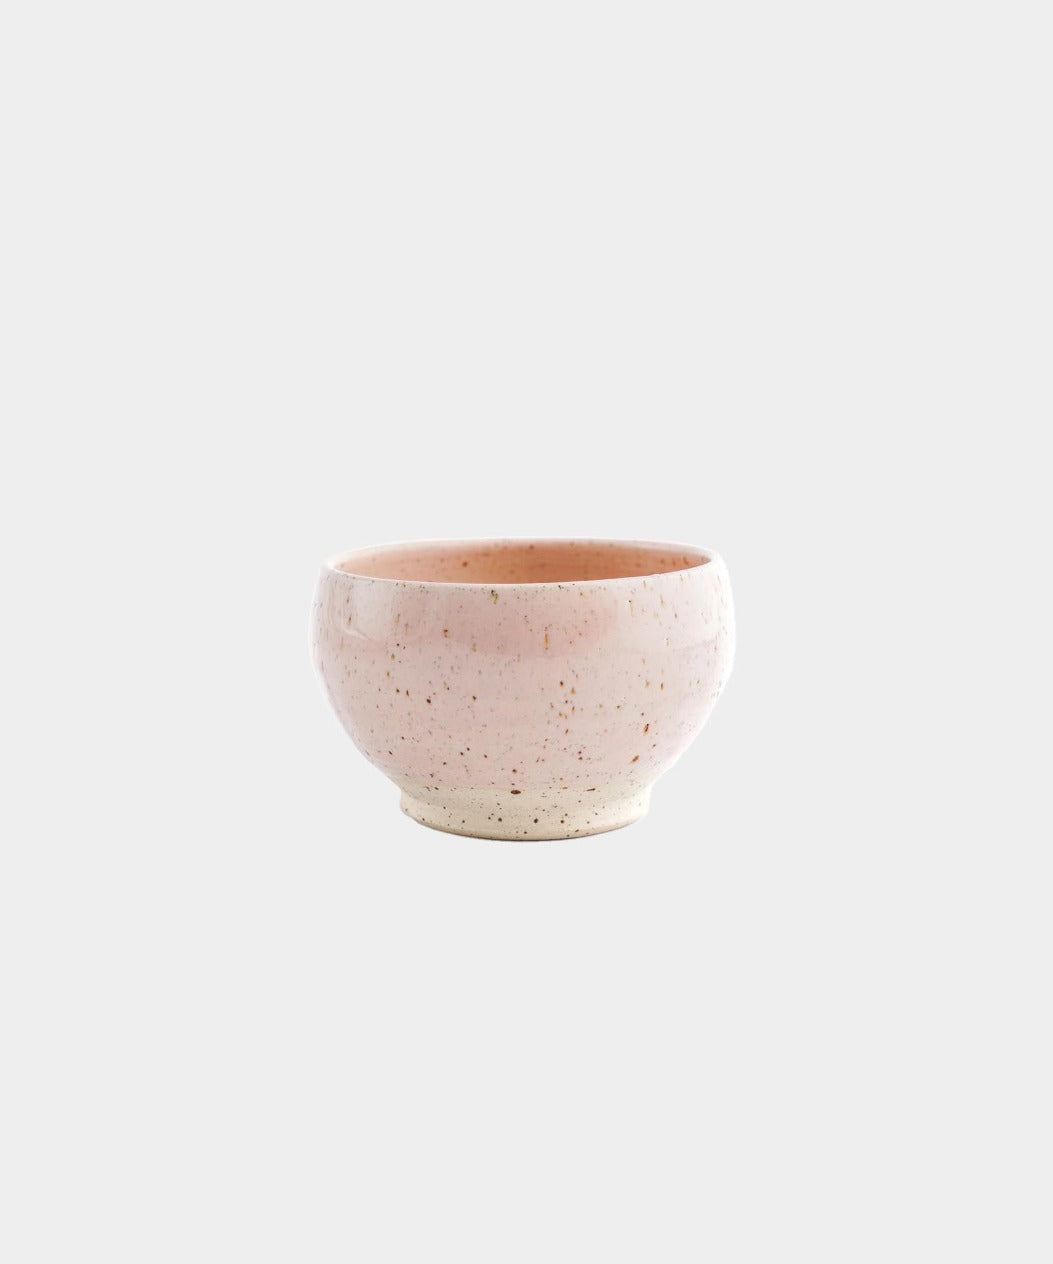 Håndlavet Keramik Nøddeskål | FLORAL by Vang | Kerama